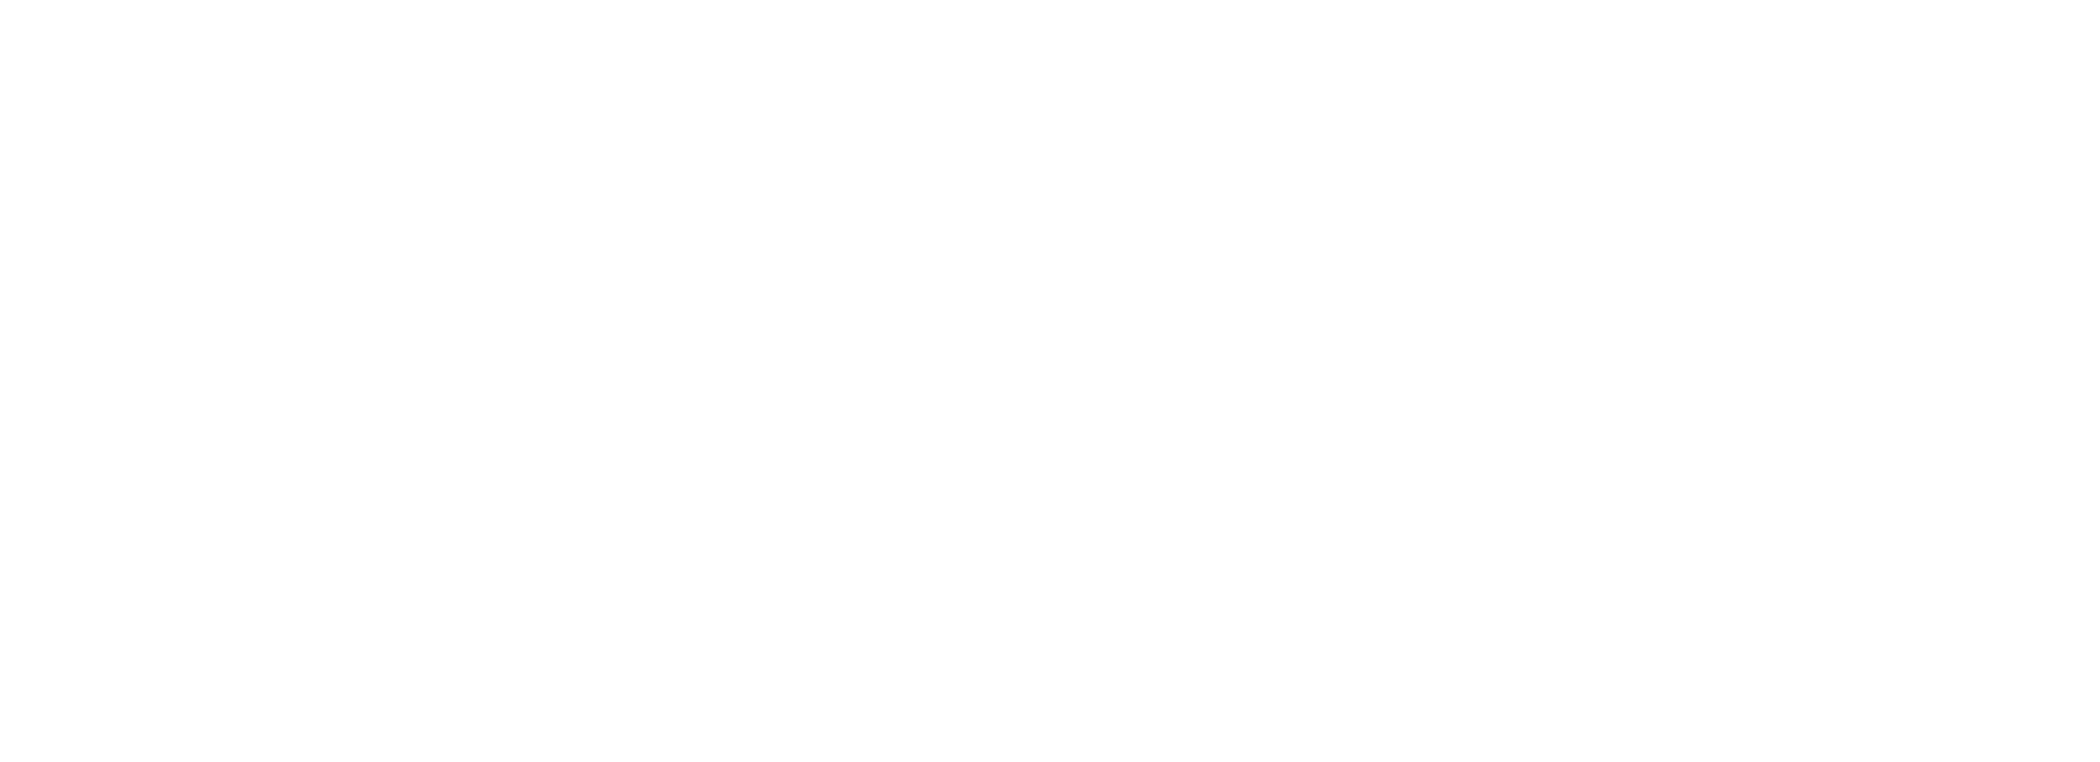 Sal's Pizza